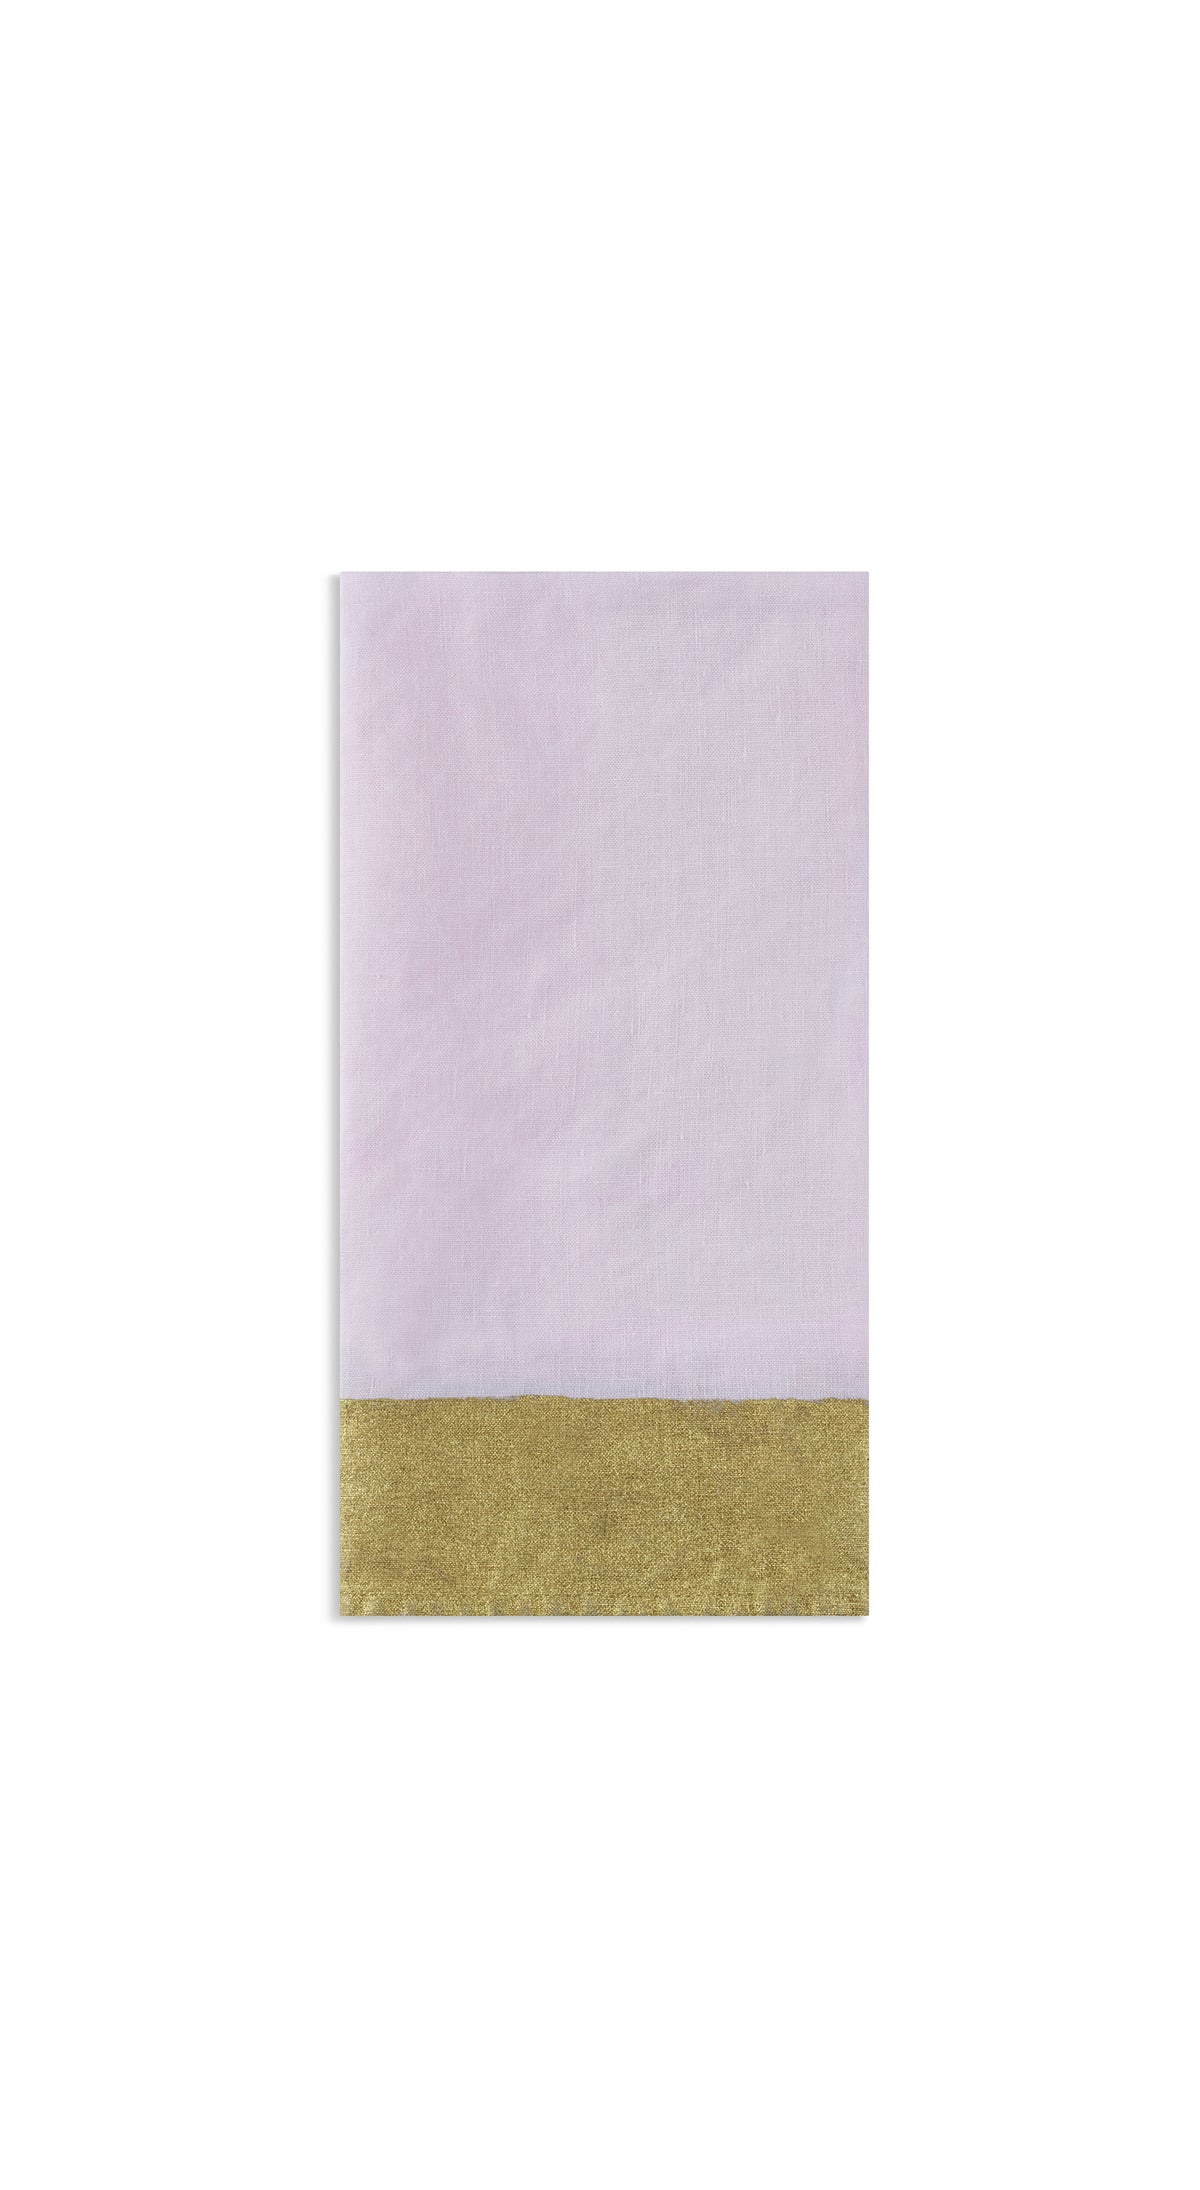 Gold Edge Linen Napkin in Pale Pink, 50x50cm